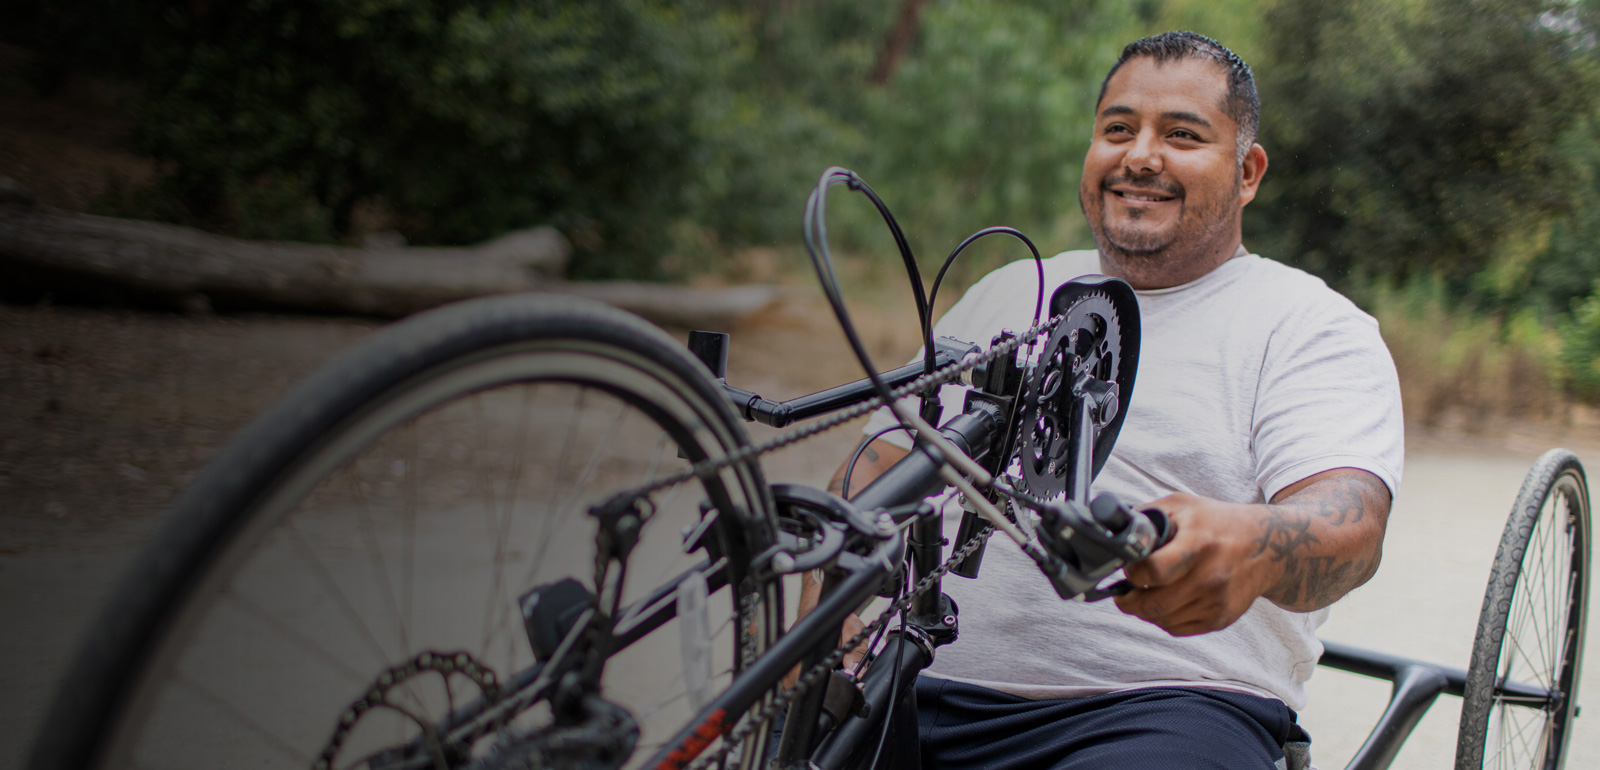 A man smiles while using a bike.